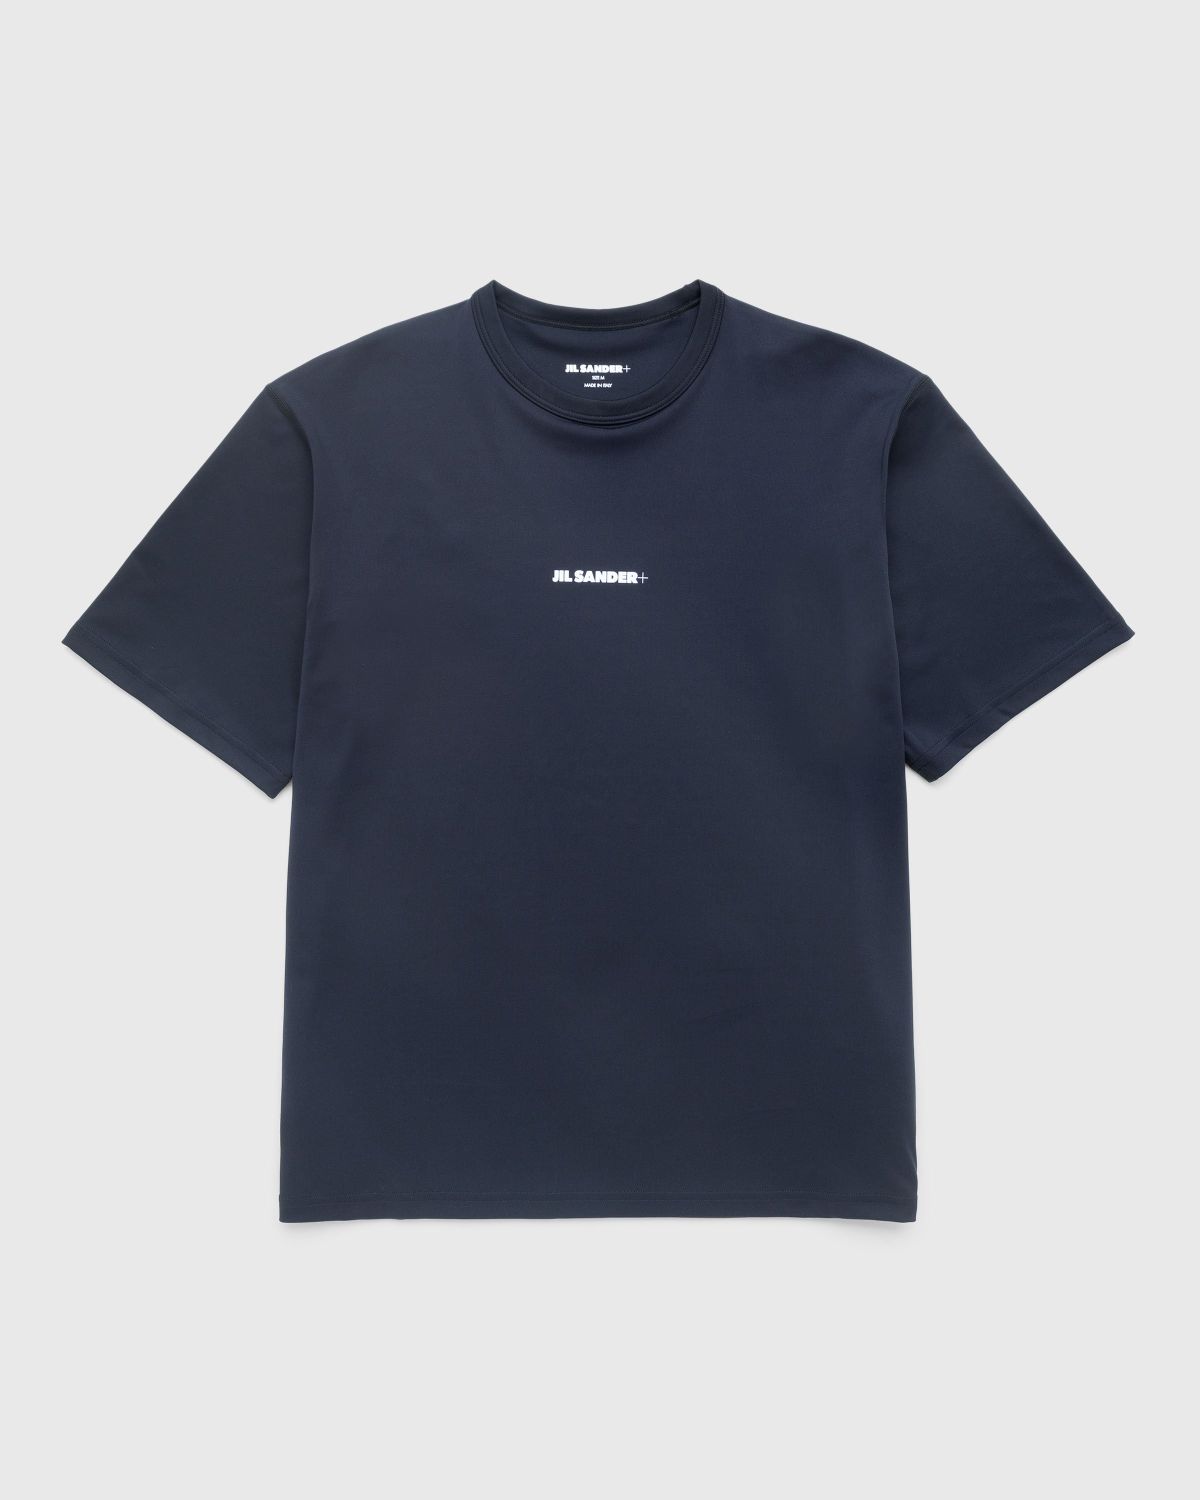 Jil Sander – Logo T-Shirt Black - Tops - Black - Image 1